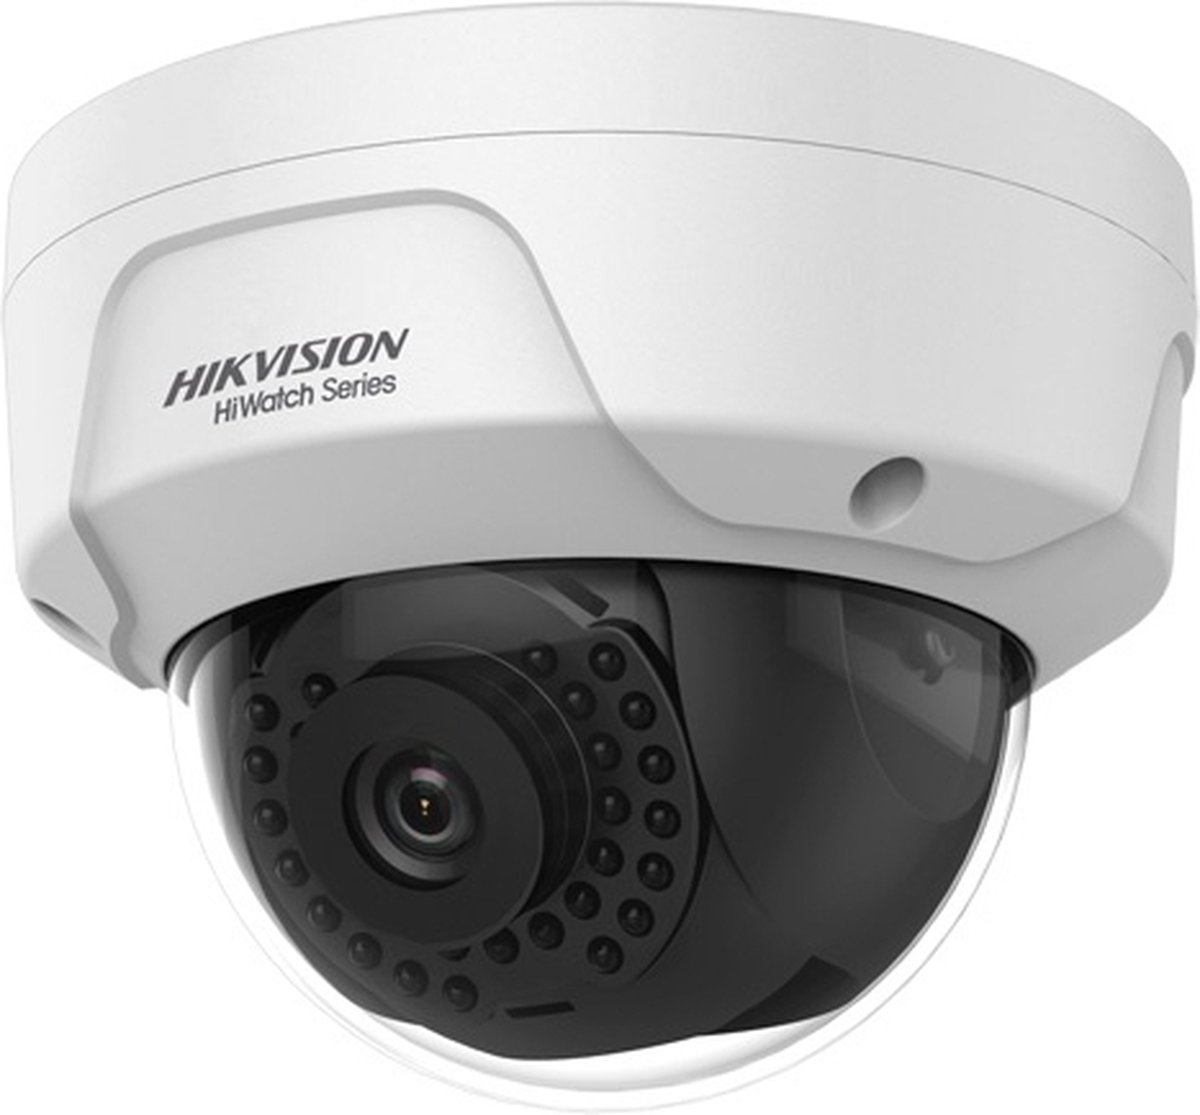 Hikvision HWI-D141H HiWatch Full HD 4MP buiten dome met IR nachtzicht, WDR en PoE - Beveiligingscamera IP camera bewakingscamera camerabewaking veiligheidscamera beveiliging netwerk camera webcam - Hikvision